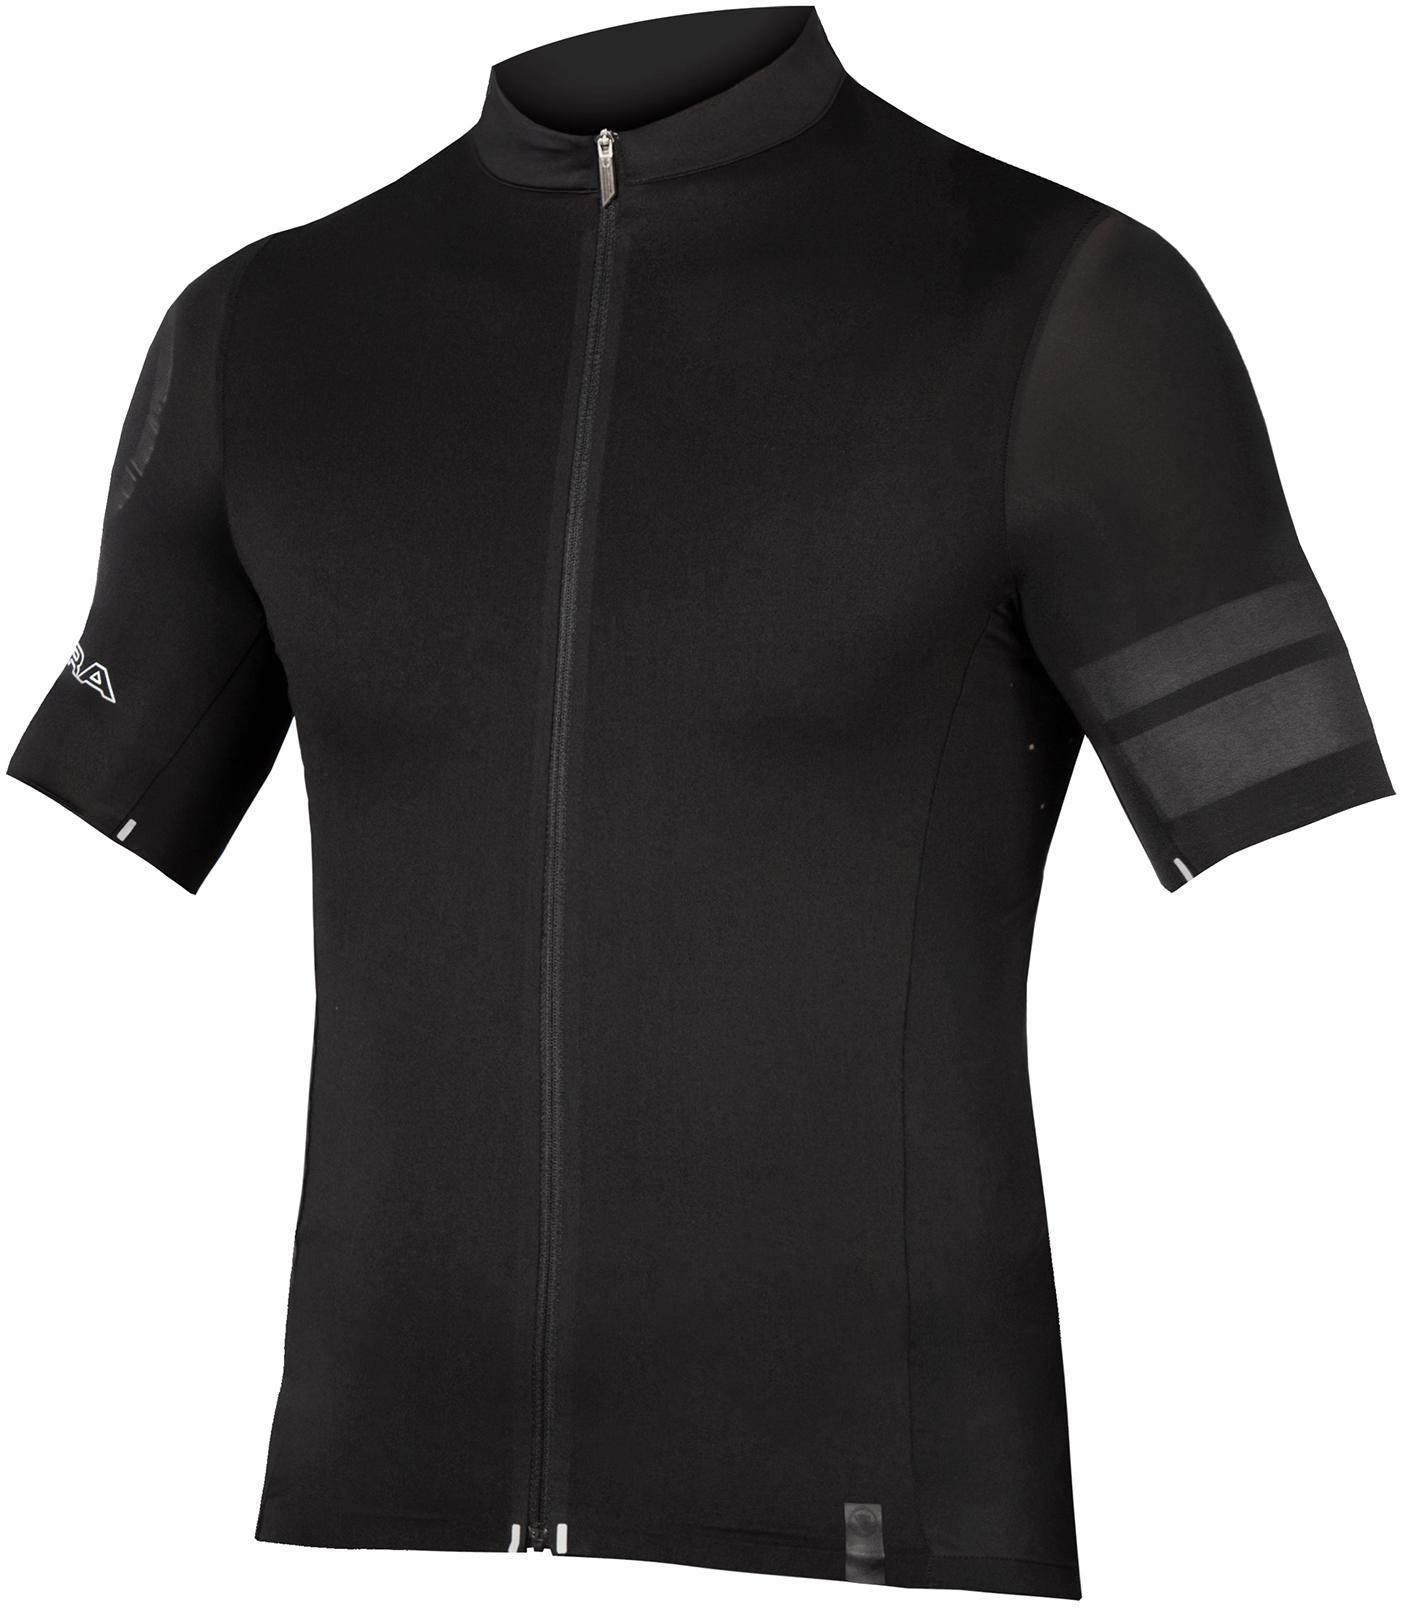 Endura Pro Sl Short Sleeve Cycling Jersey - Black